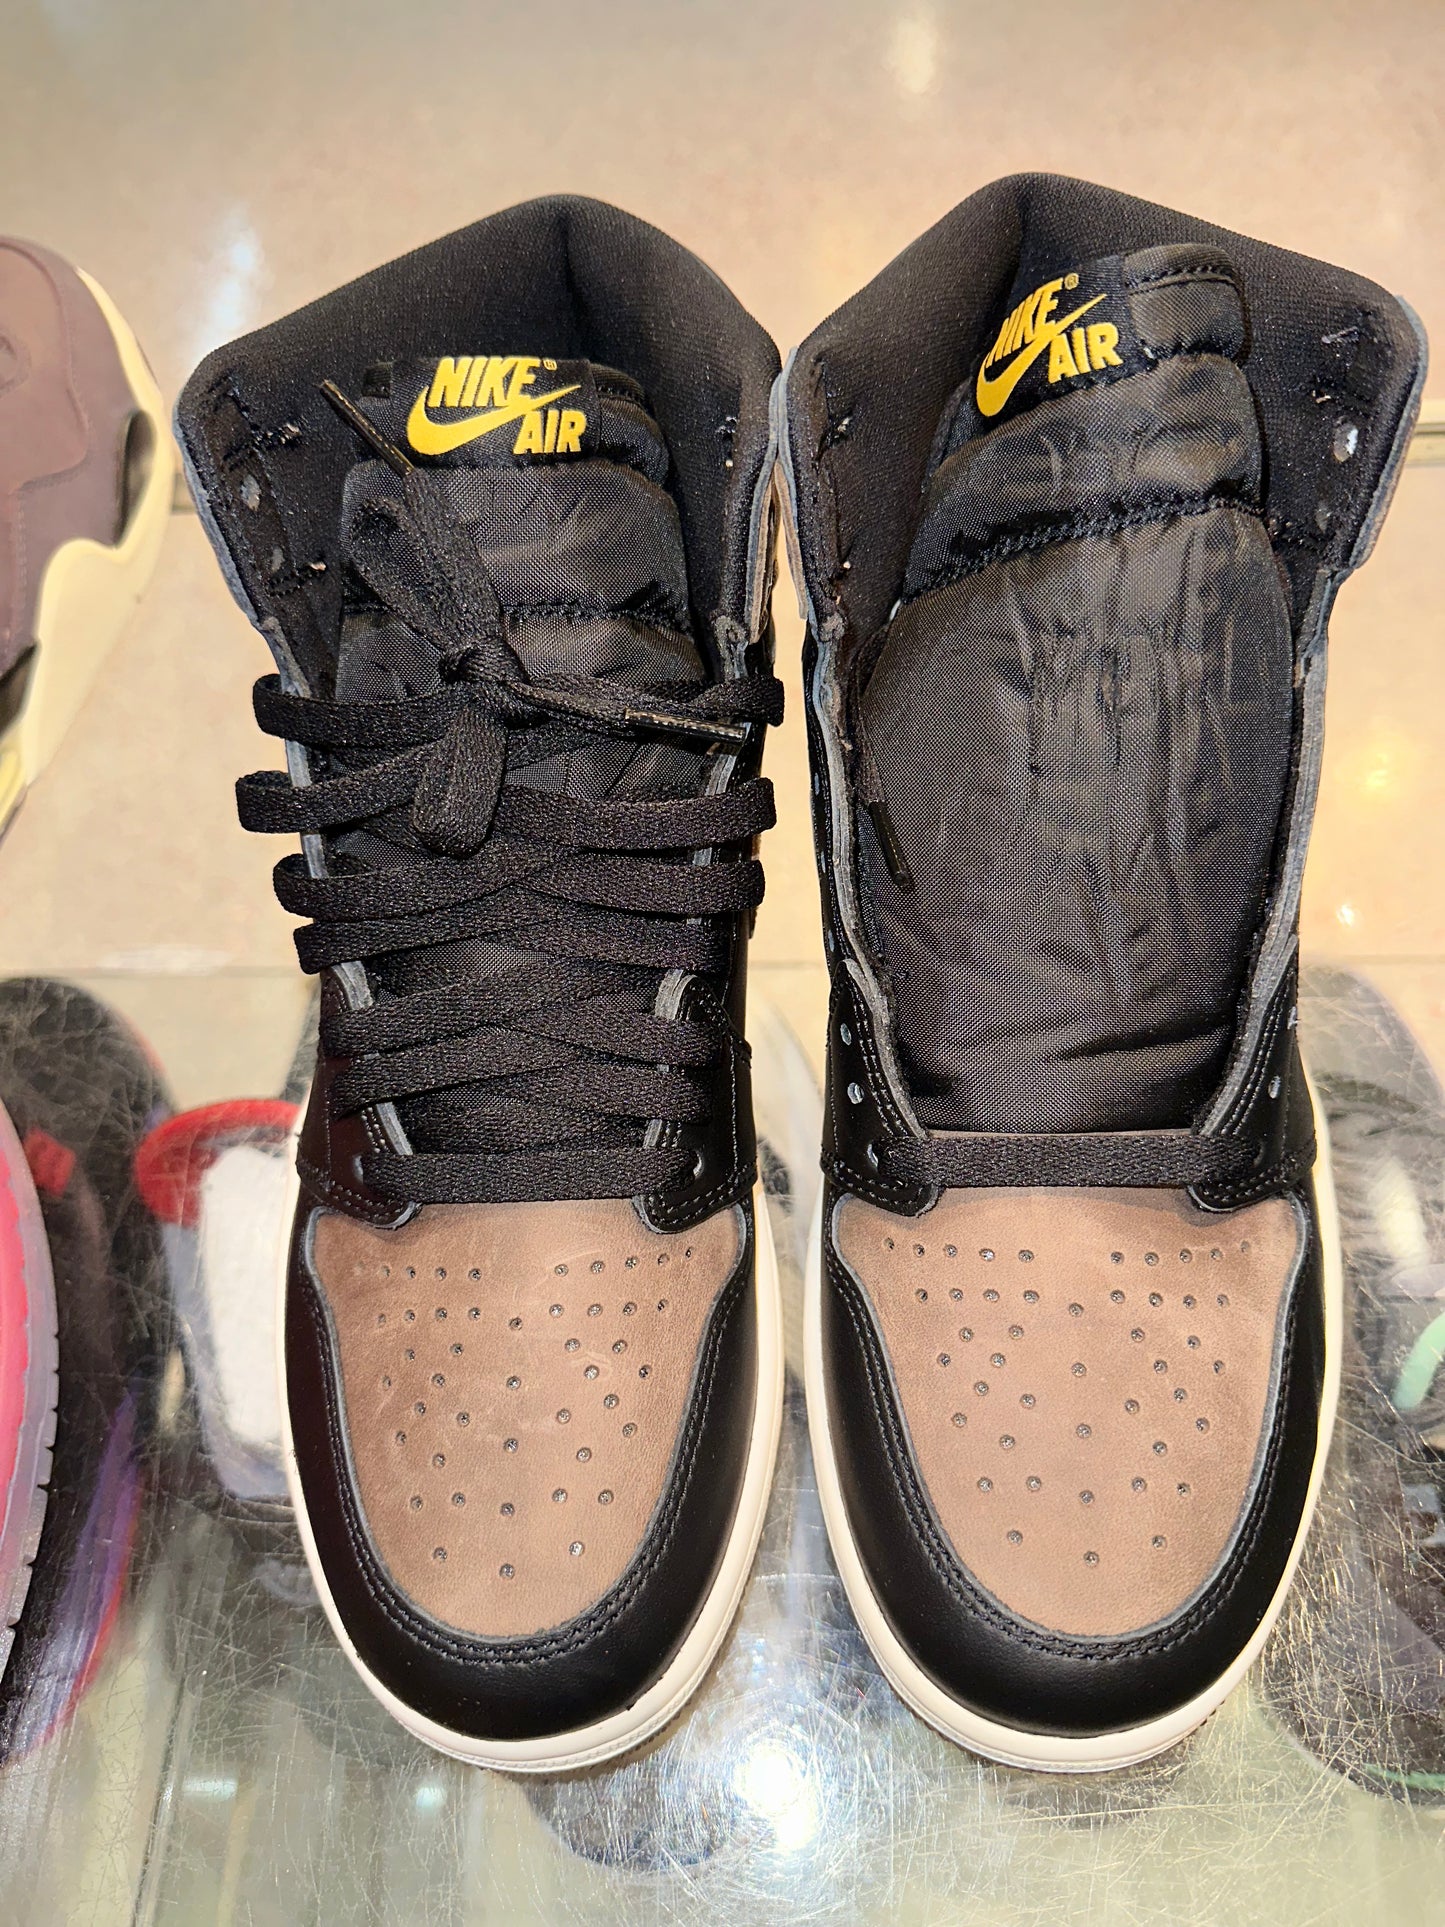 Size 8.5 Air Jordan 1 “Palomino” Brand New (Mall)